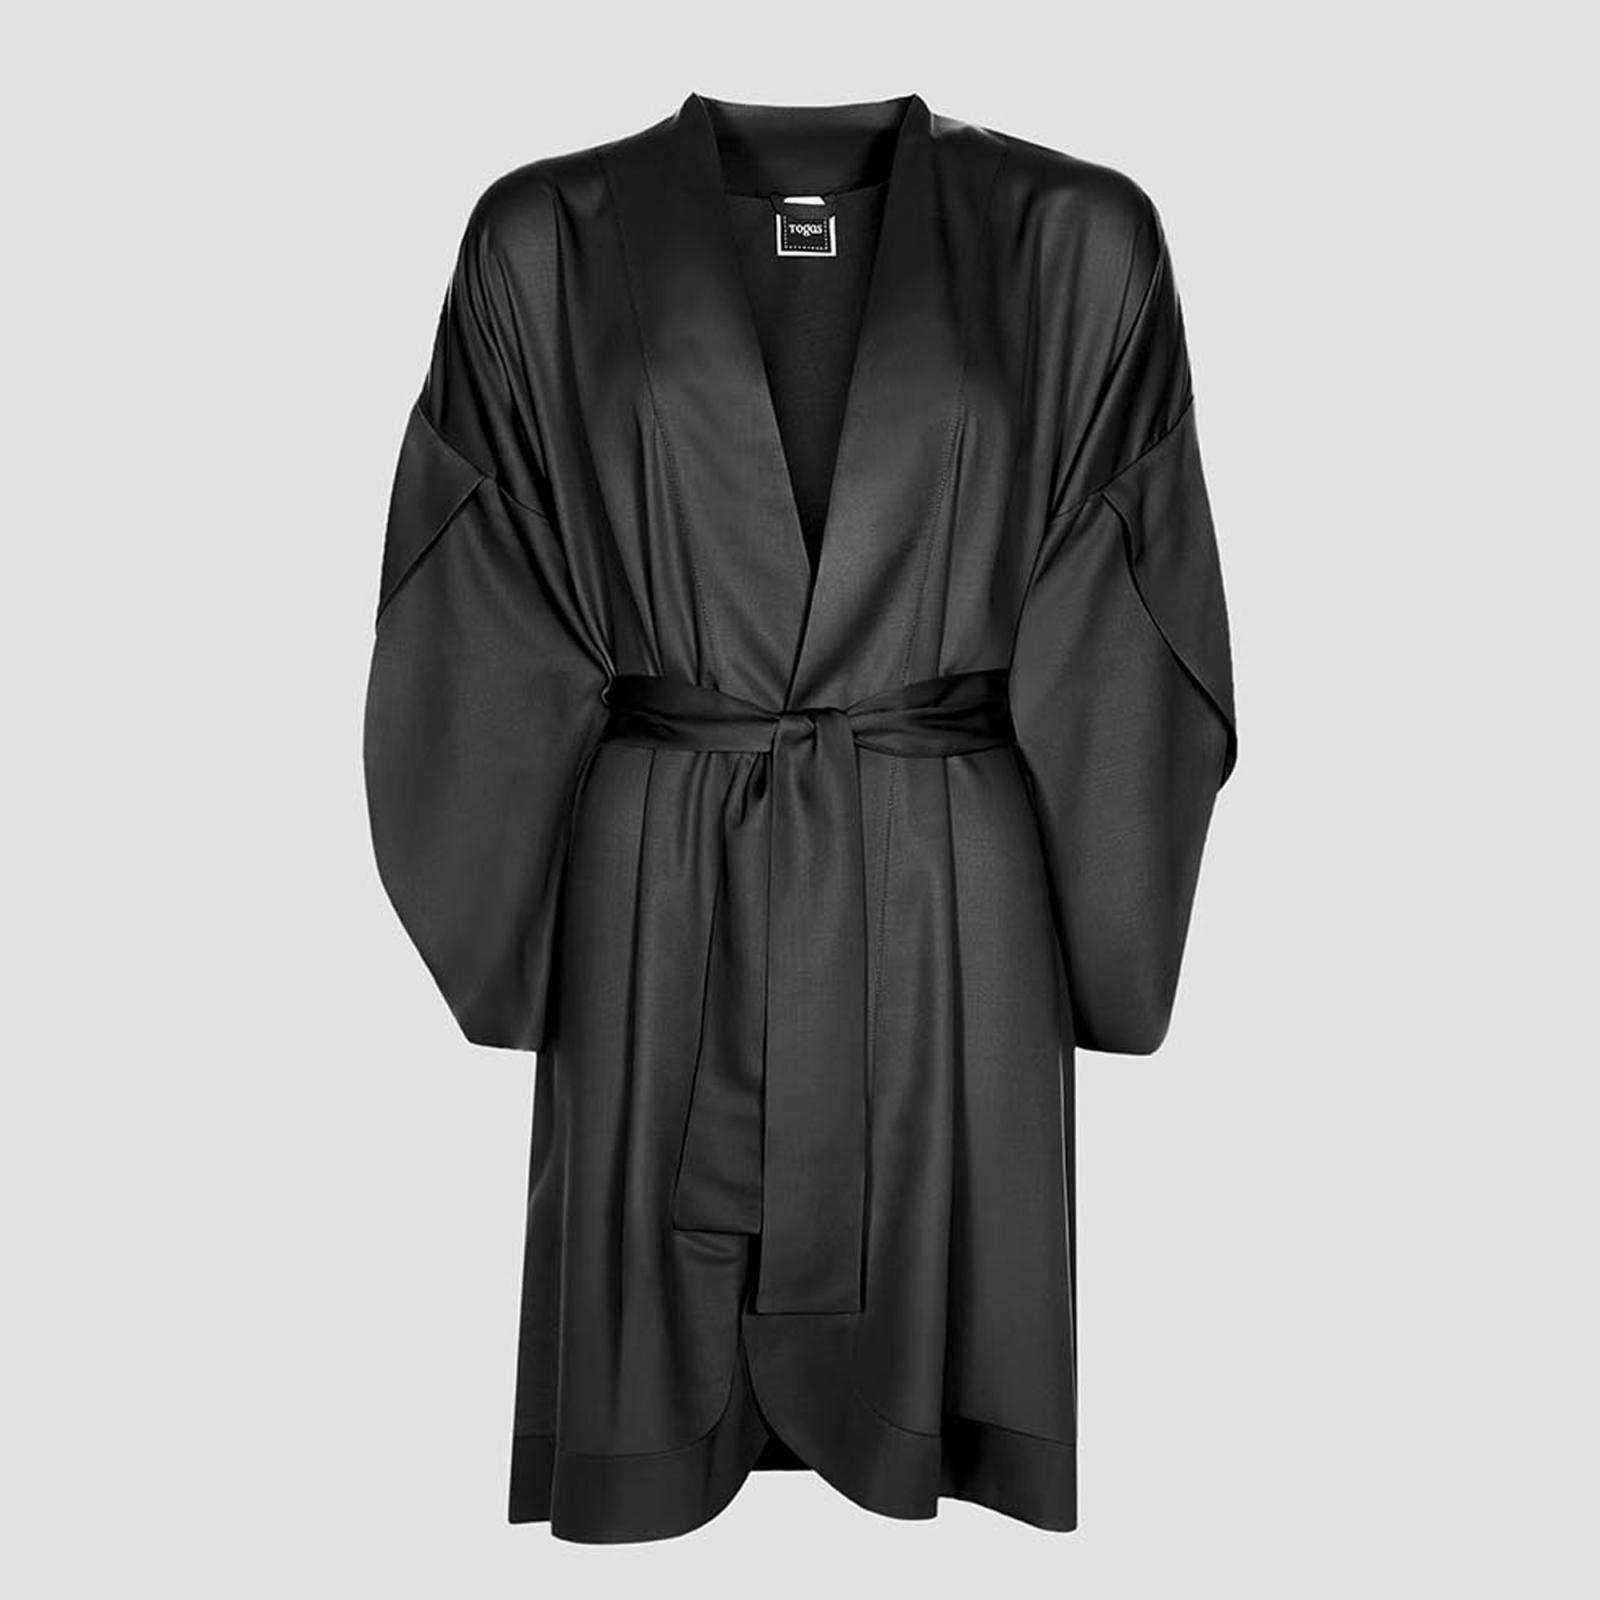 Халат-кимоно короткое Togas Наоми чёрное S (44) халат кимоно togas наоми зеленый xl 50